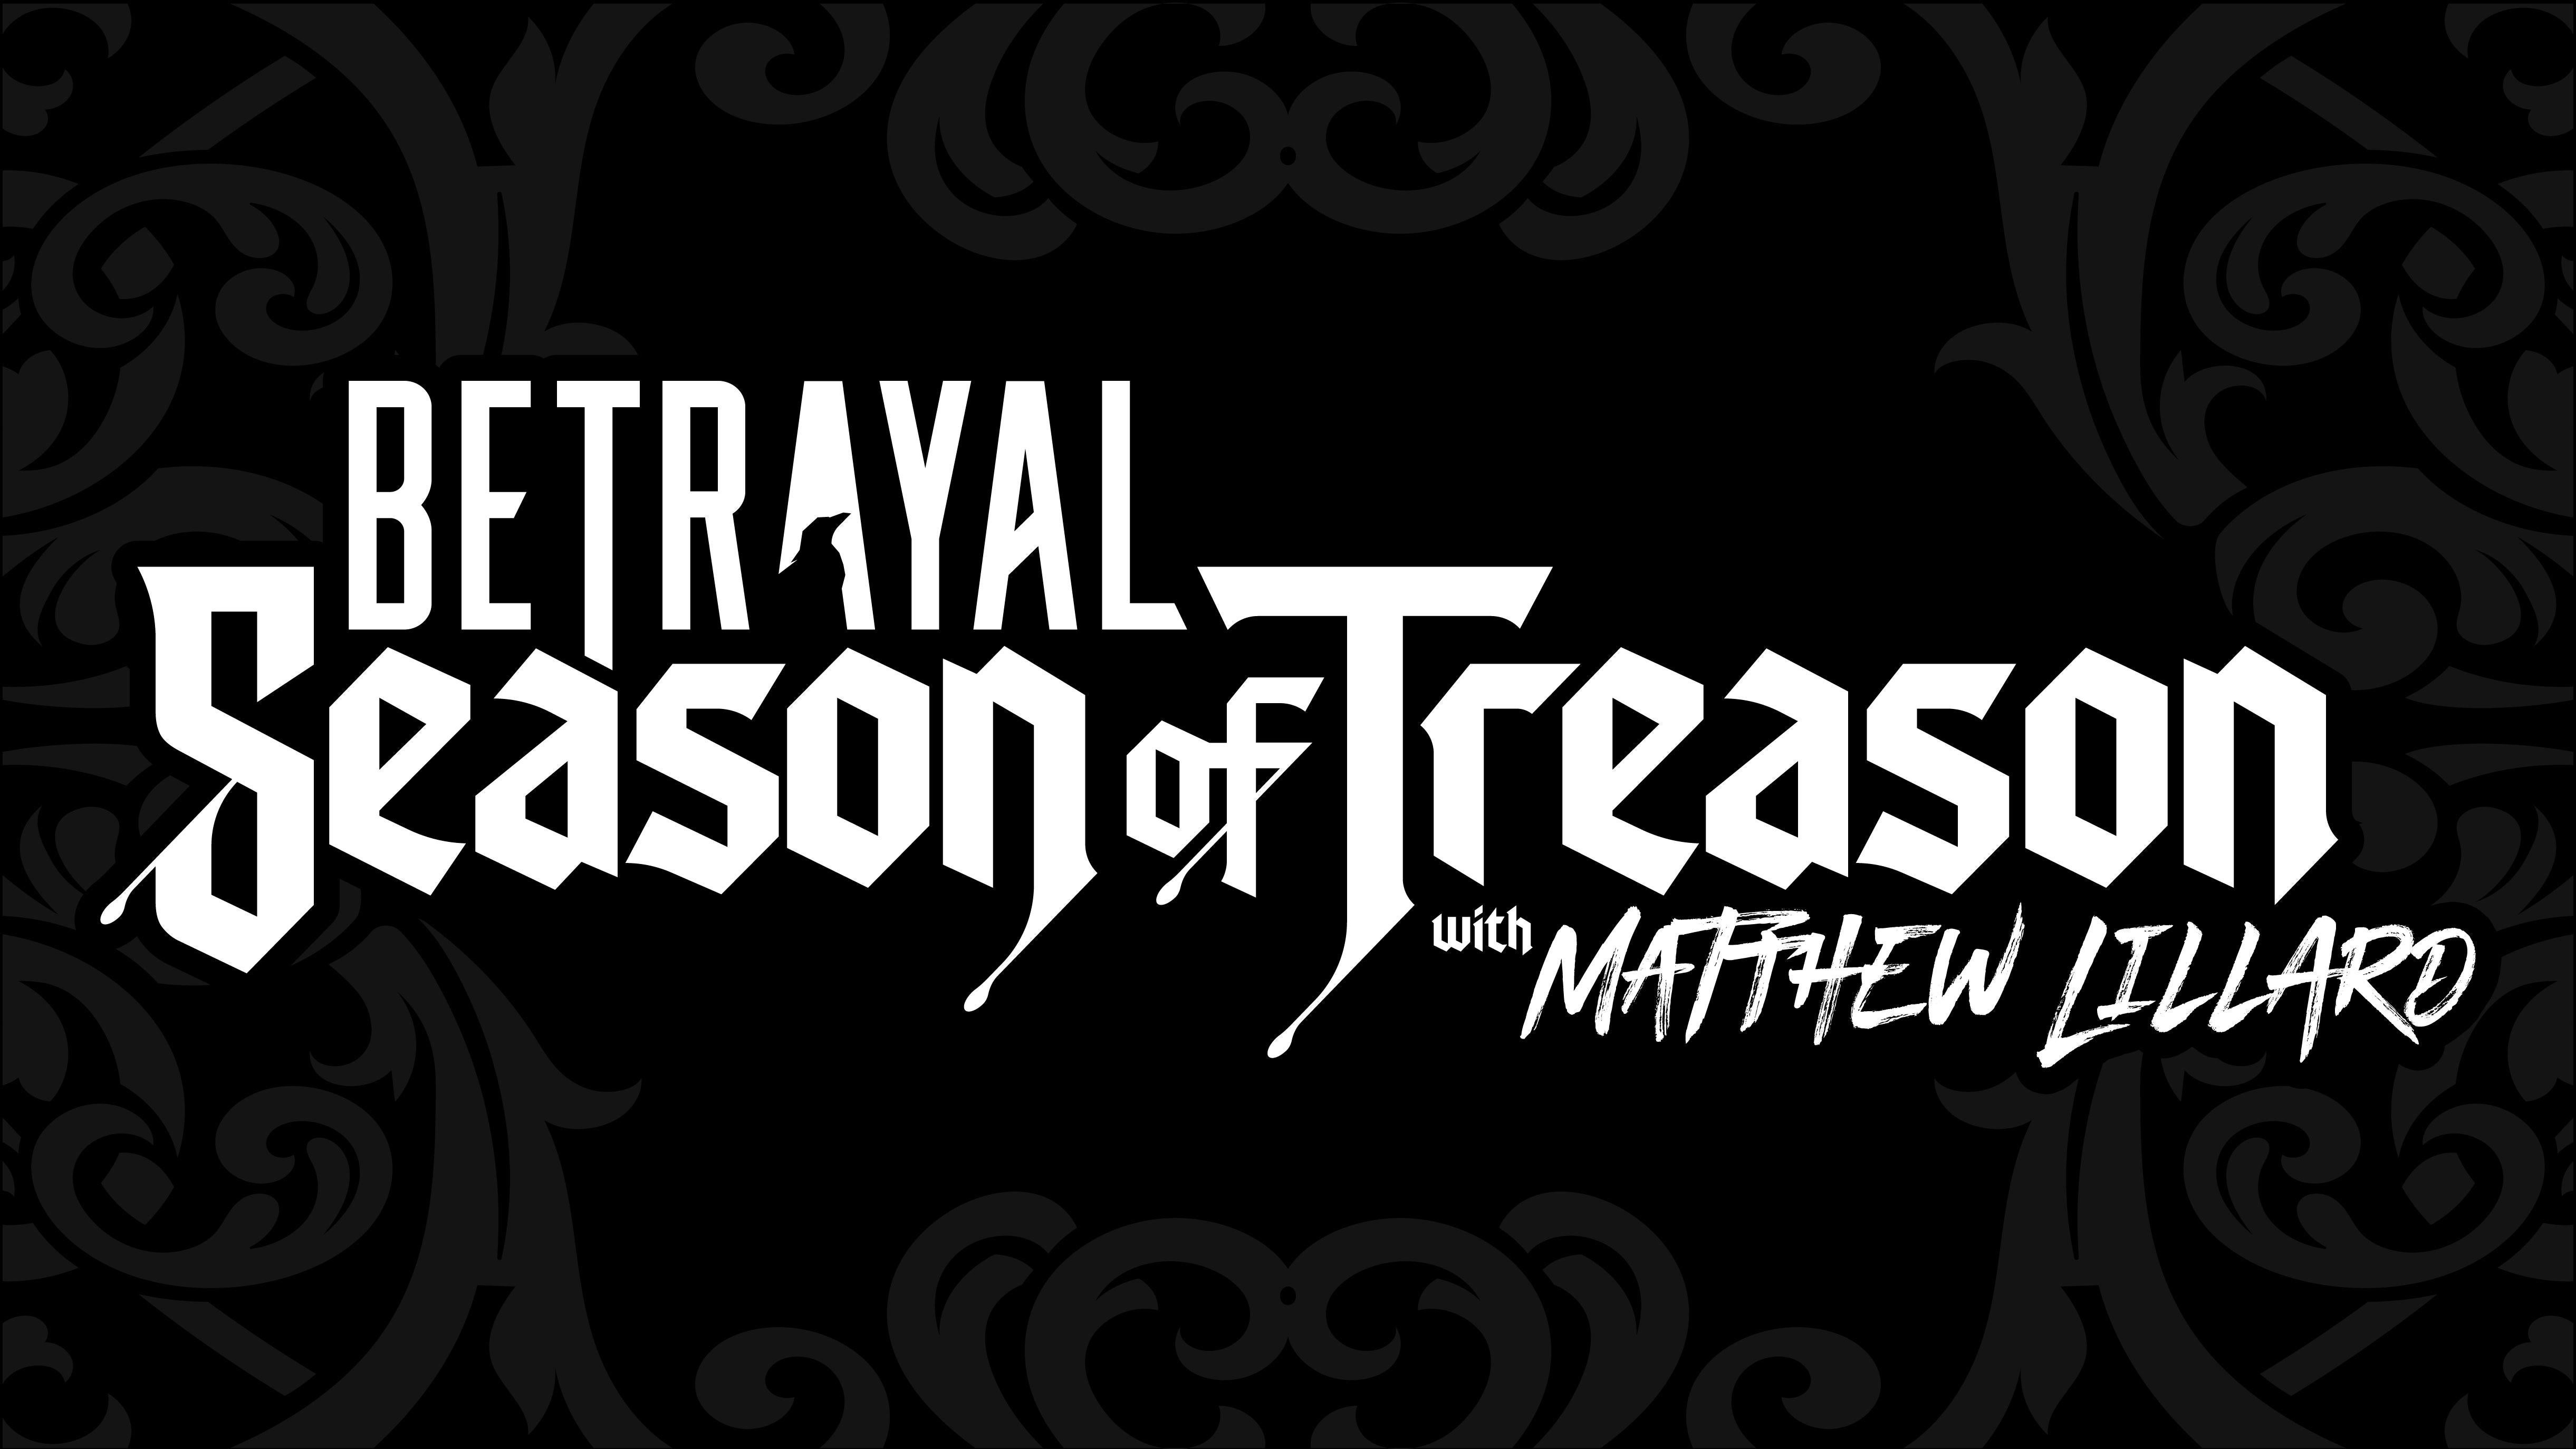 betrayal-season-of-treason-asset-4.jpg